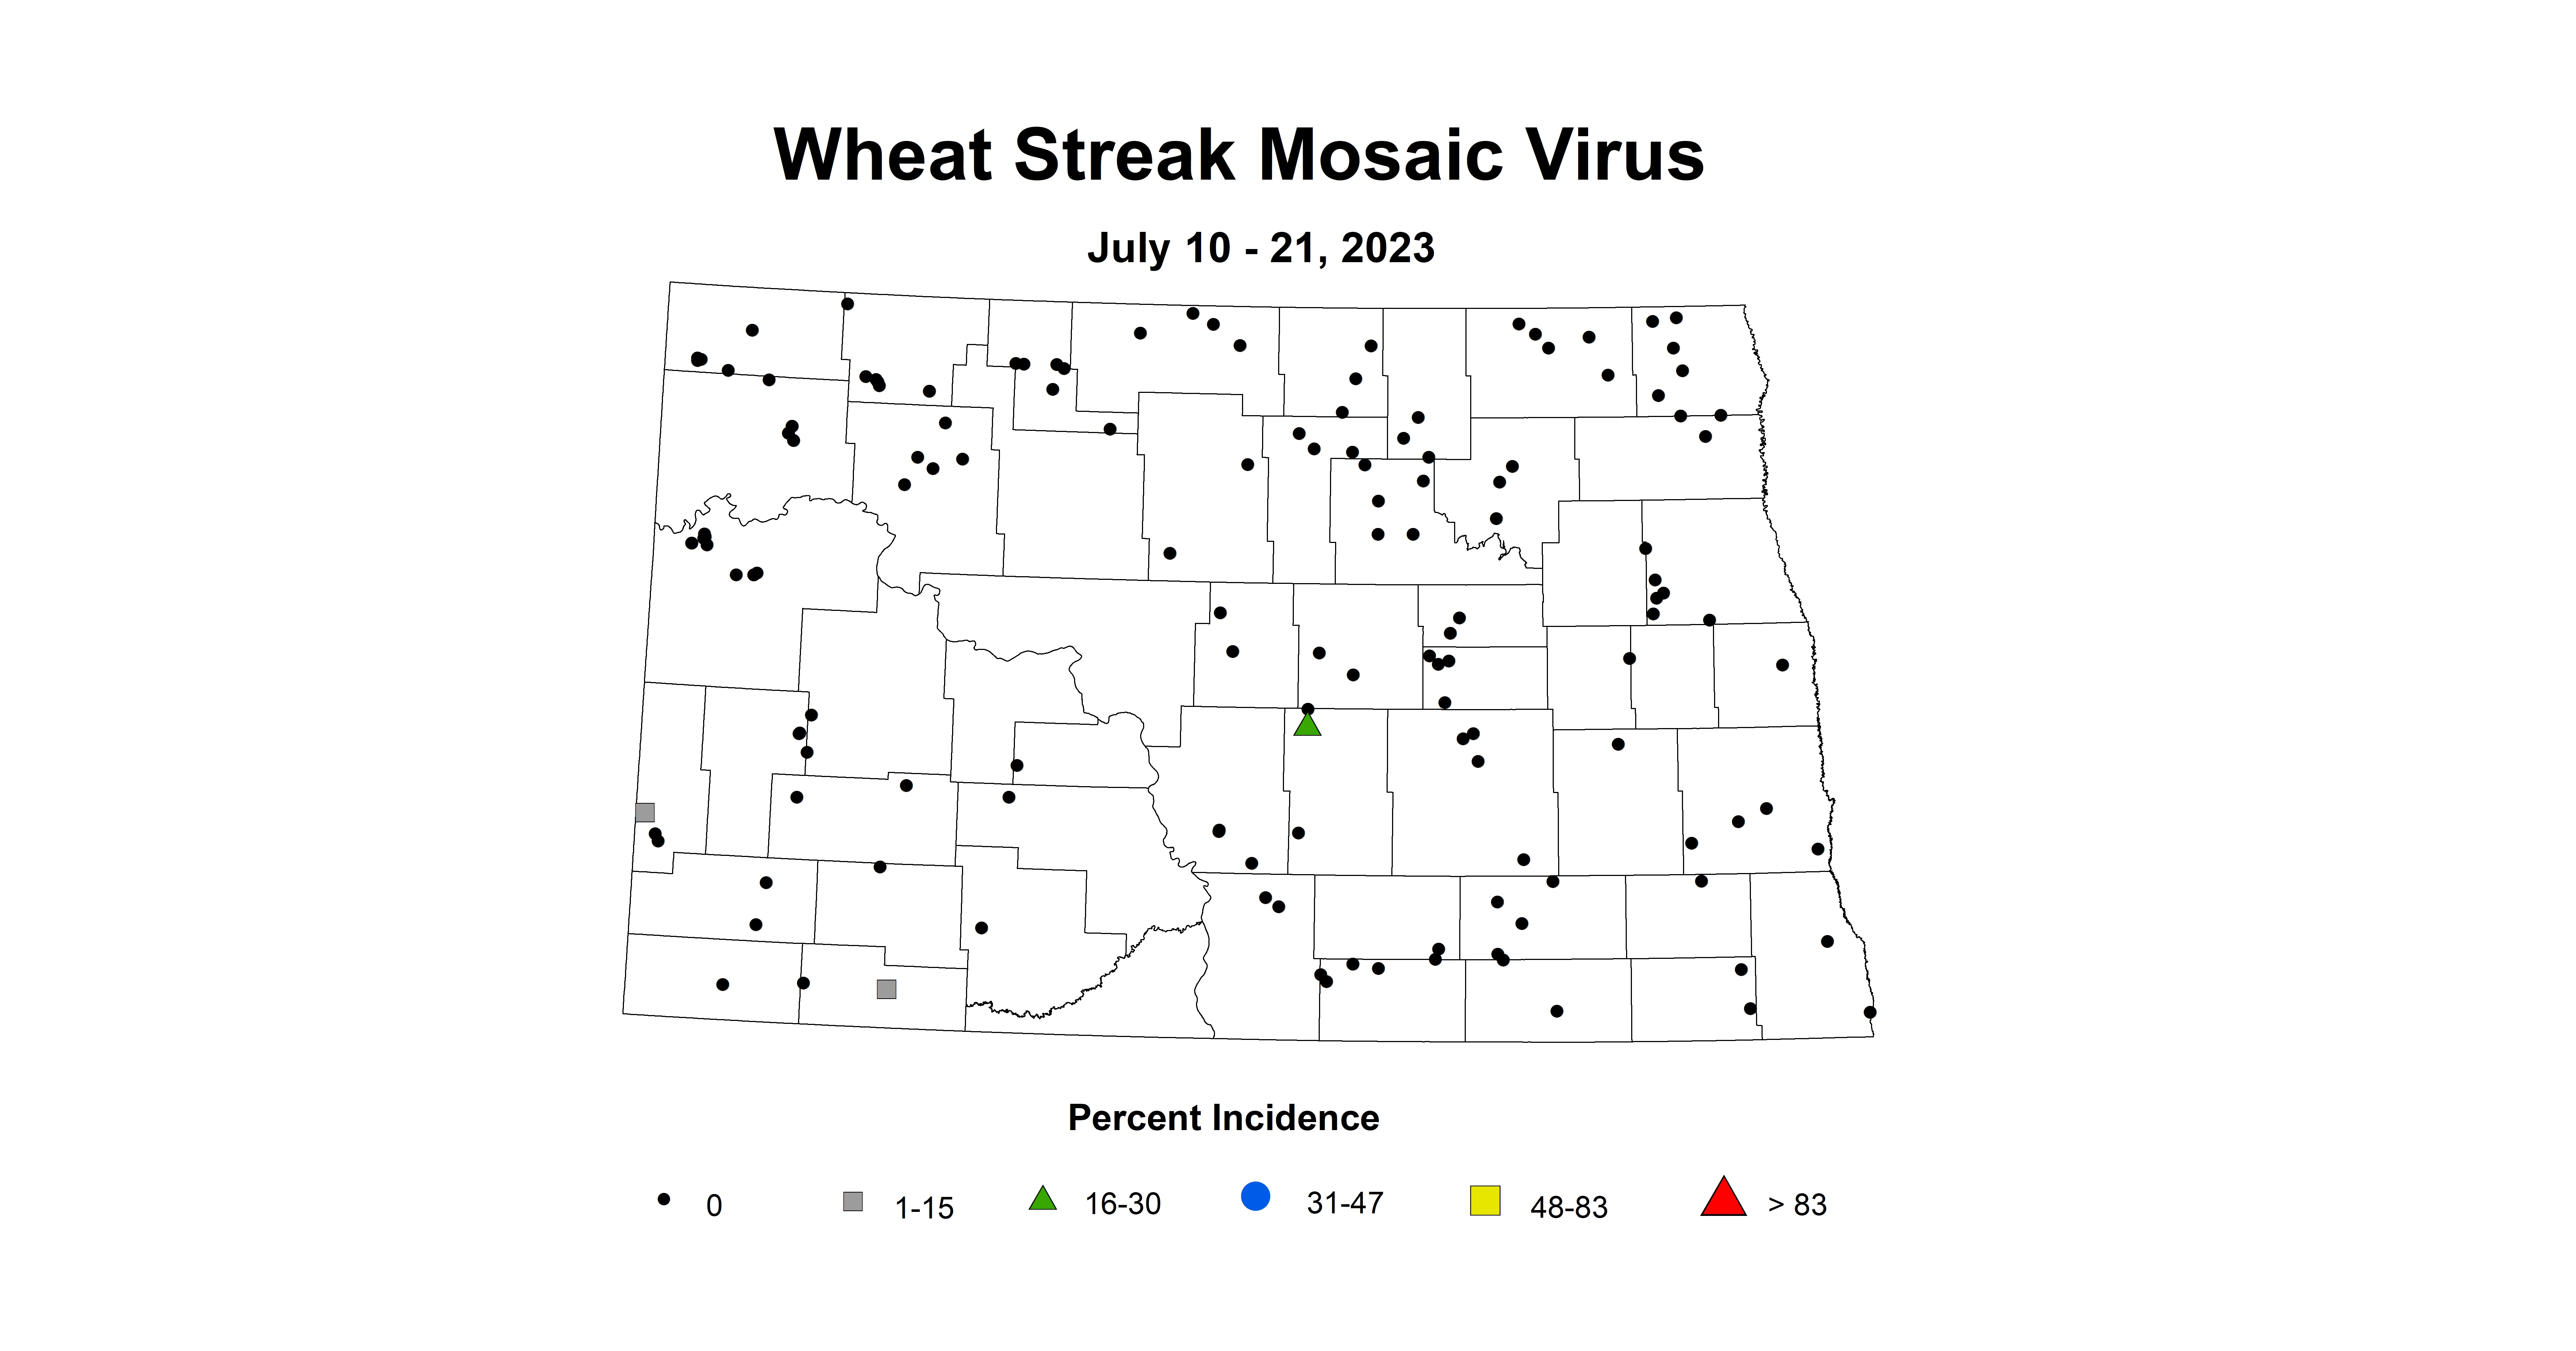 wheat streak mosaic virus July 10-21 2023